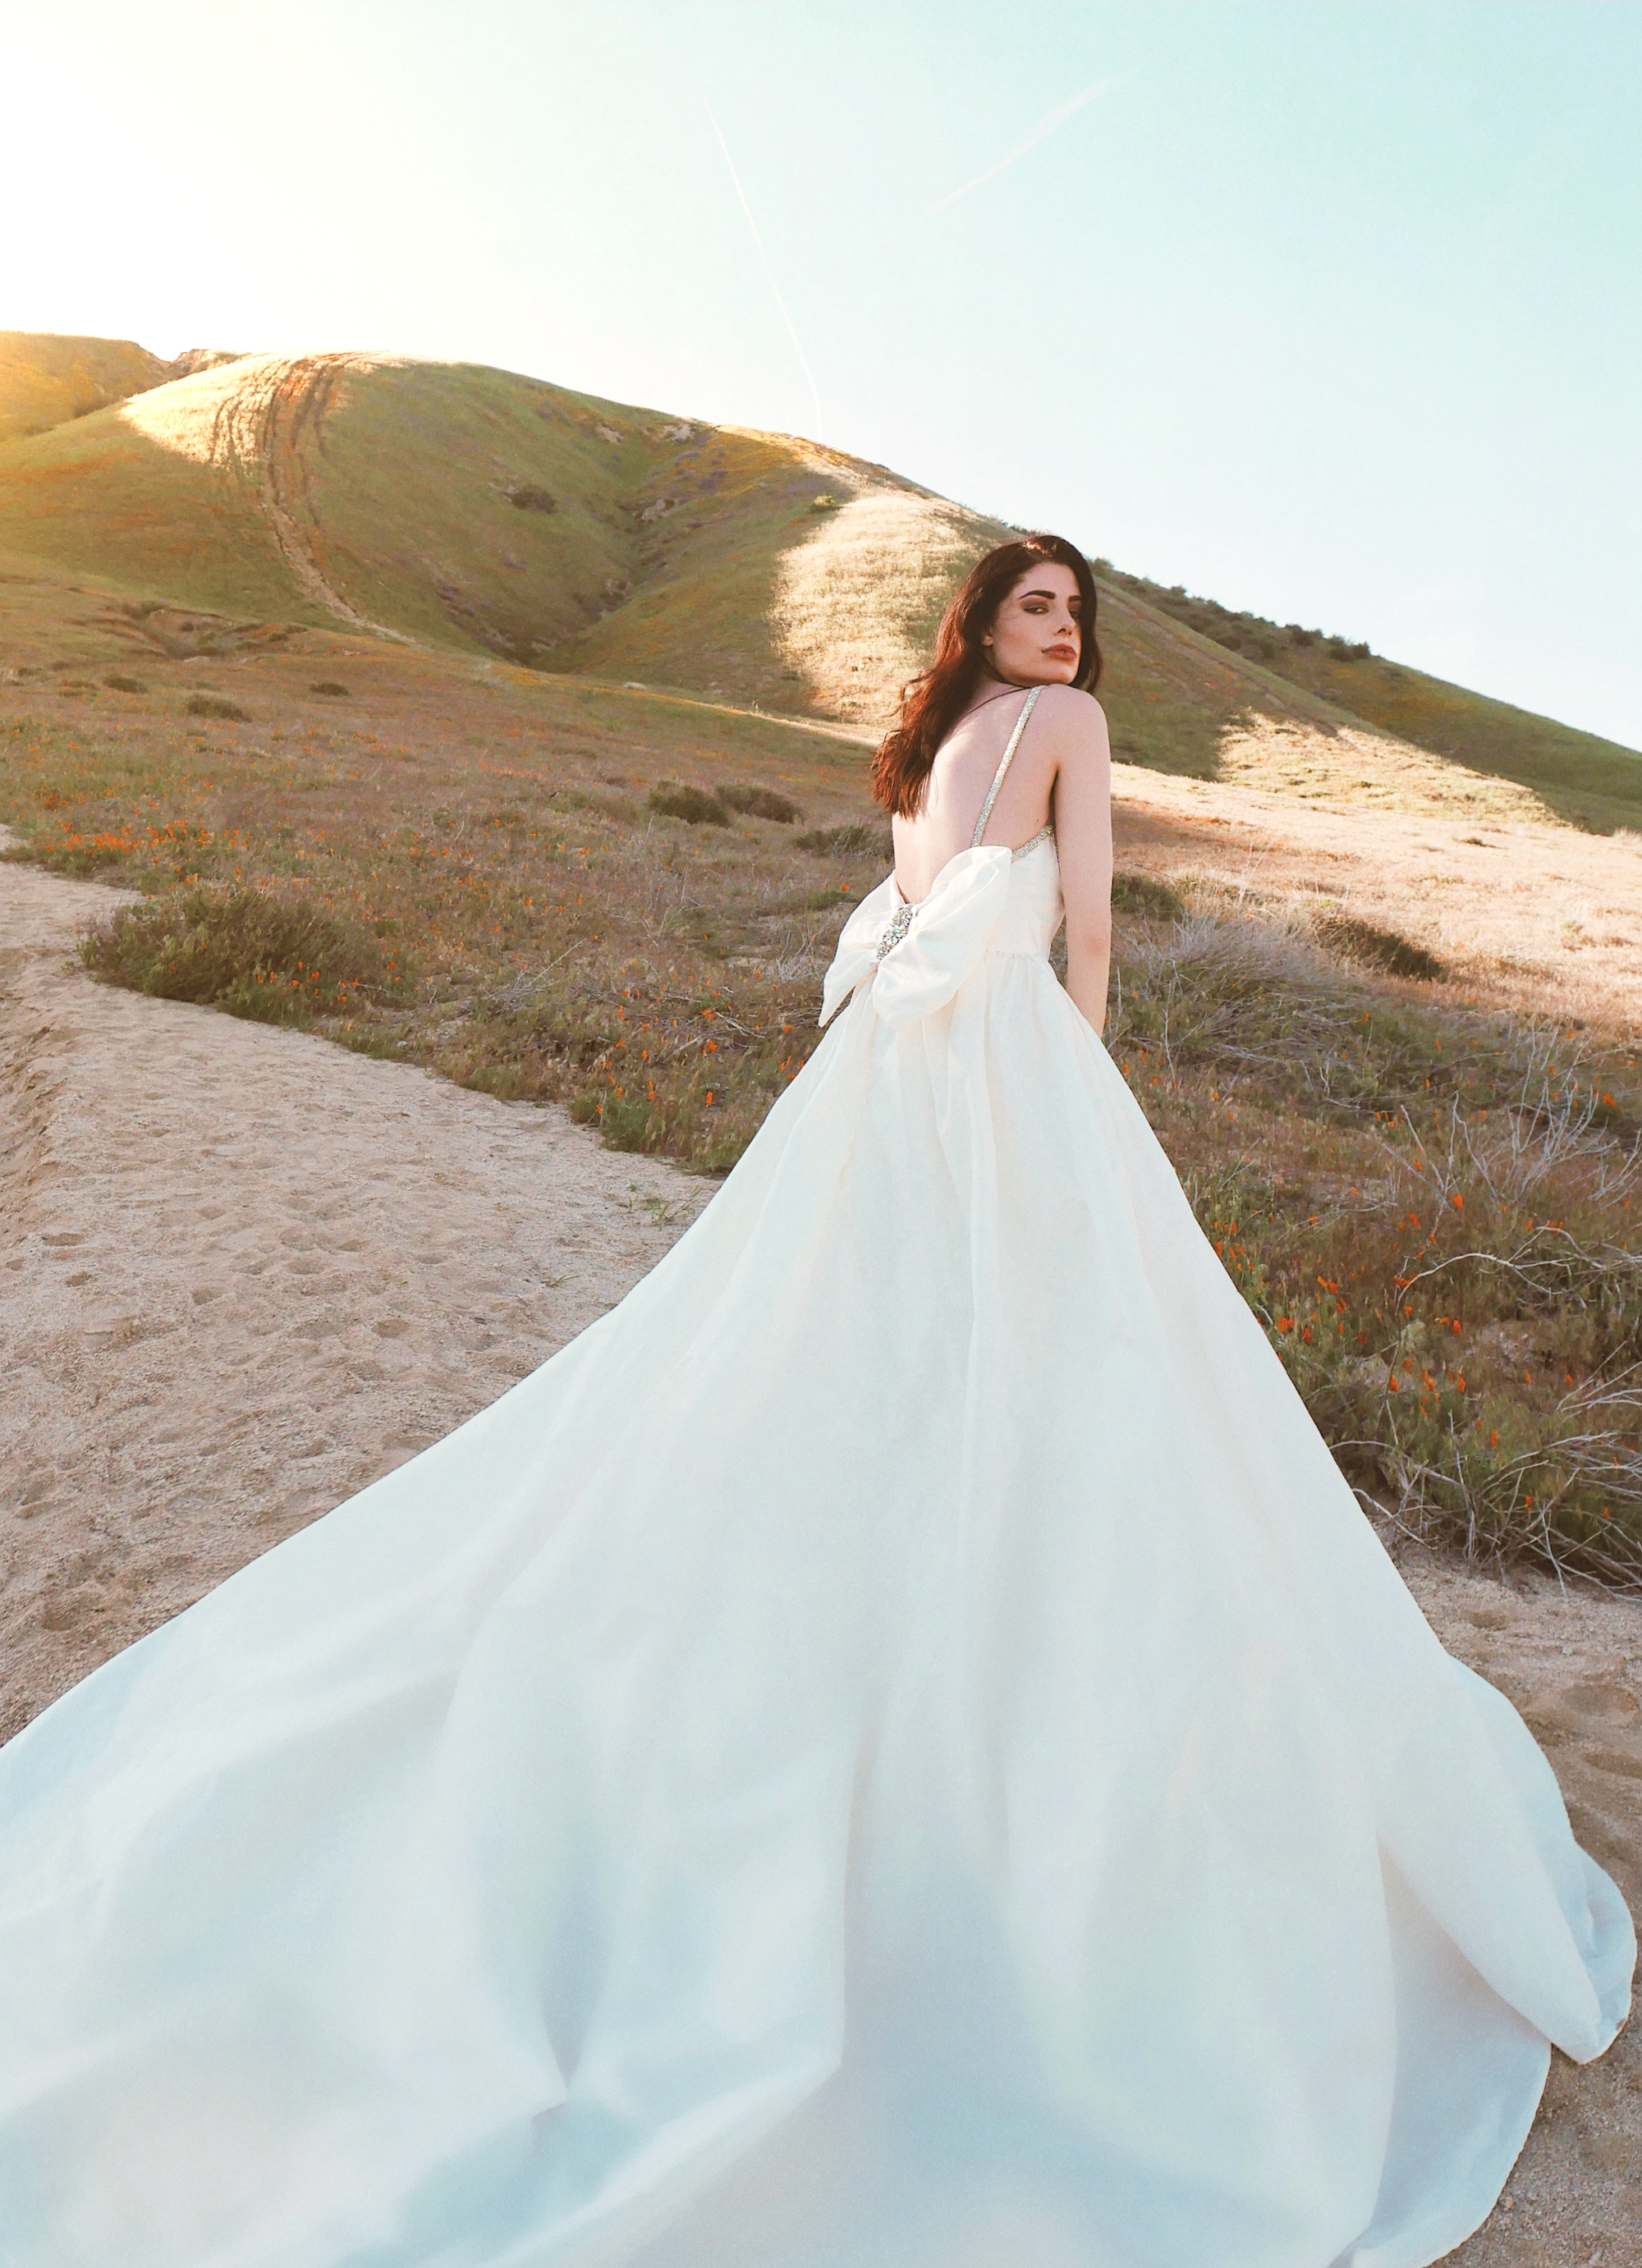 Customizable wedding gown trains by Lauren Elaine Los Angeles